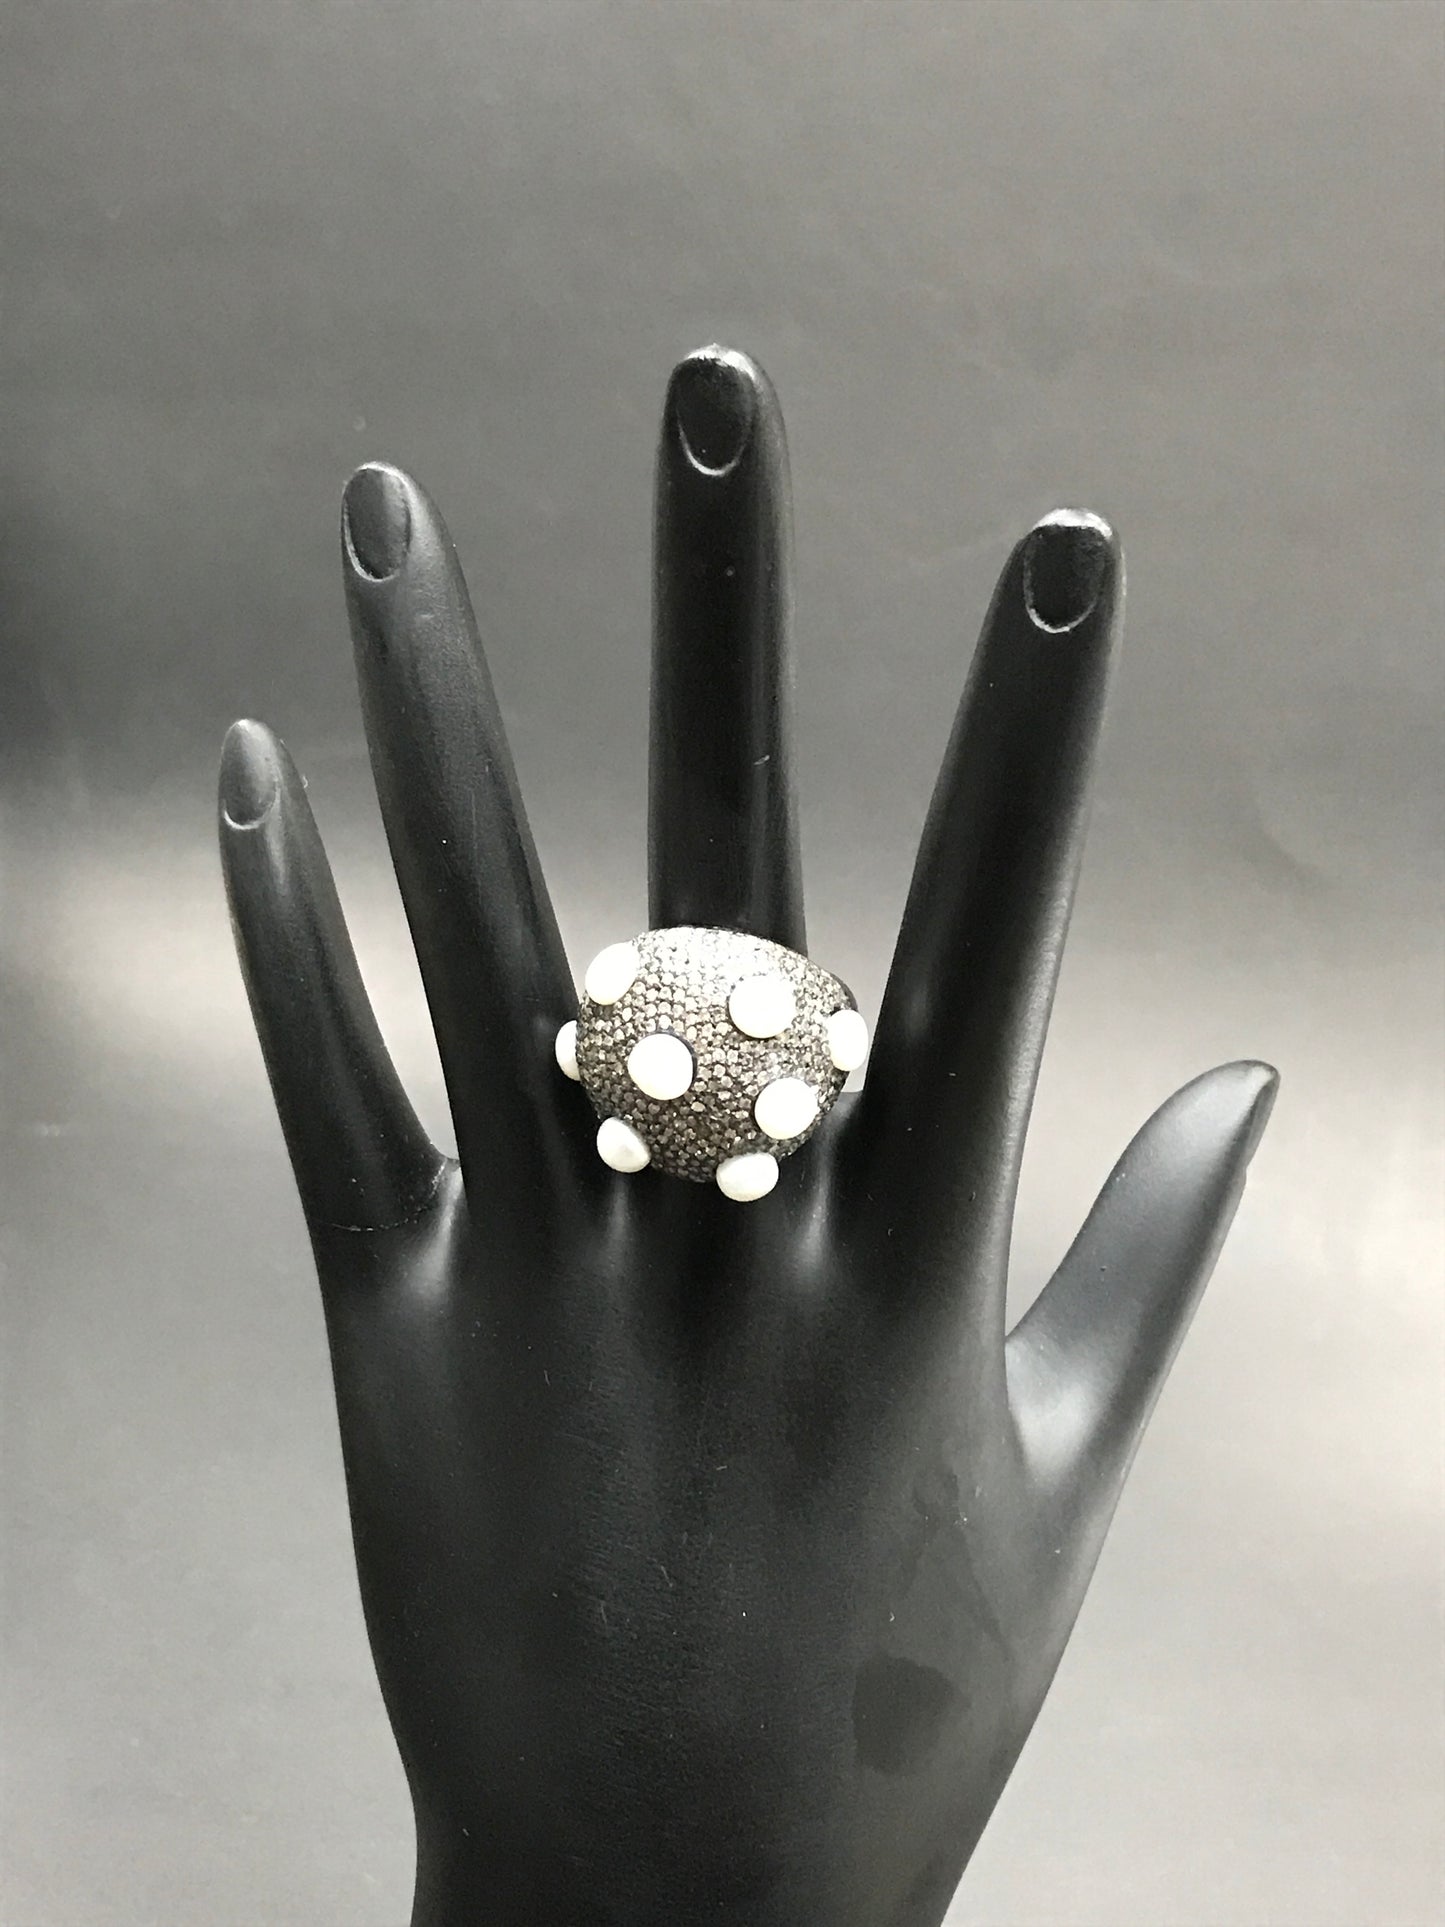 Diamond Dome Diamond Ring with Pearls, Pave Diamond Ring, Pave Dome Ring with Pearls, Approx 19 x 24mm. Sterling Silver